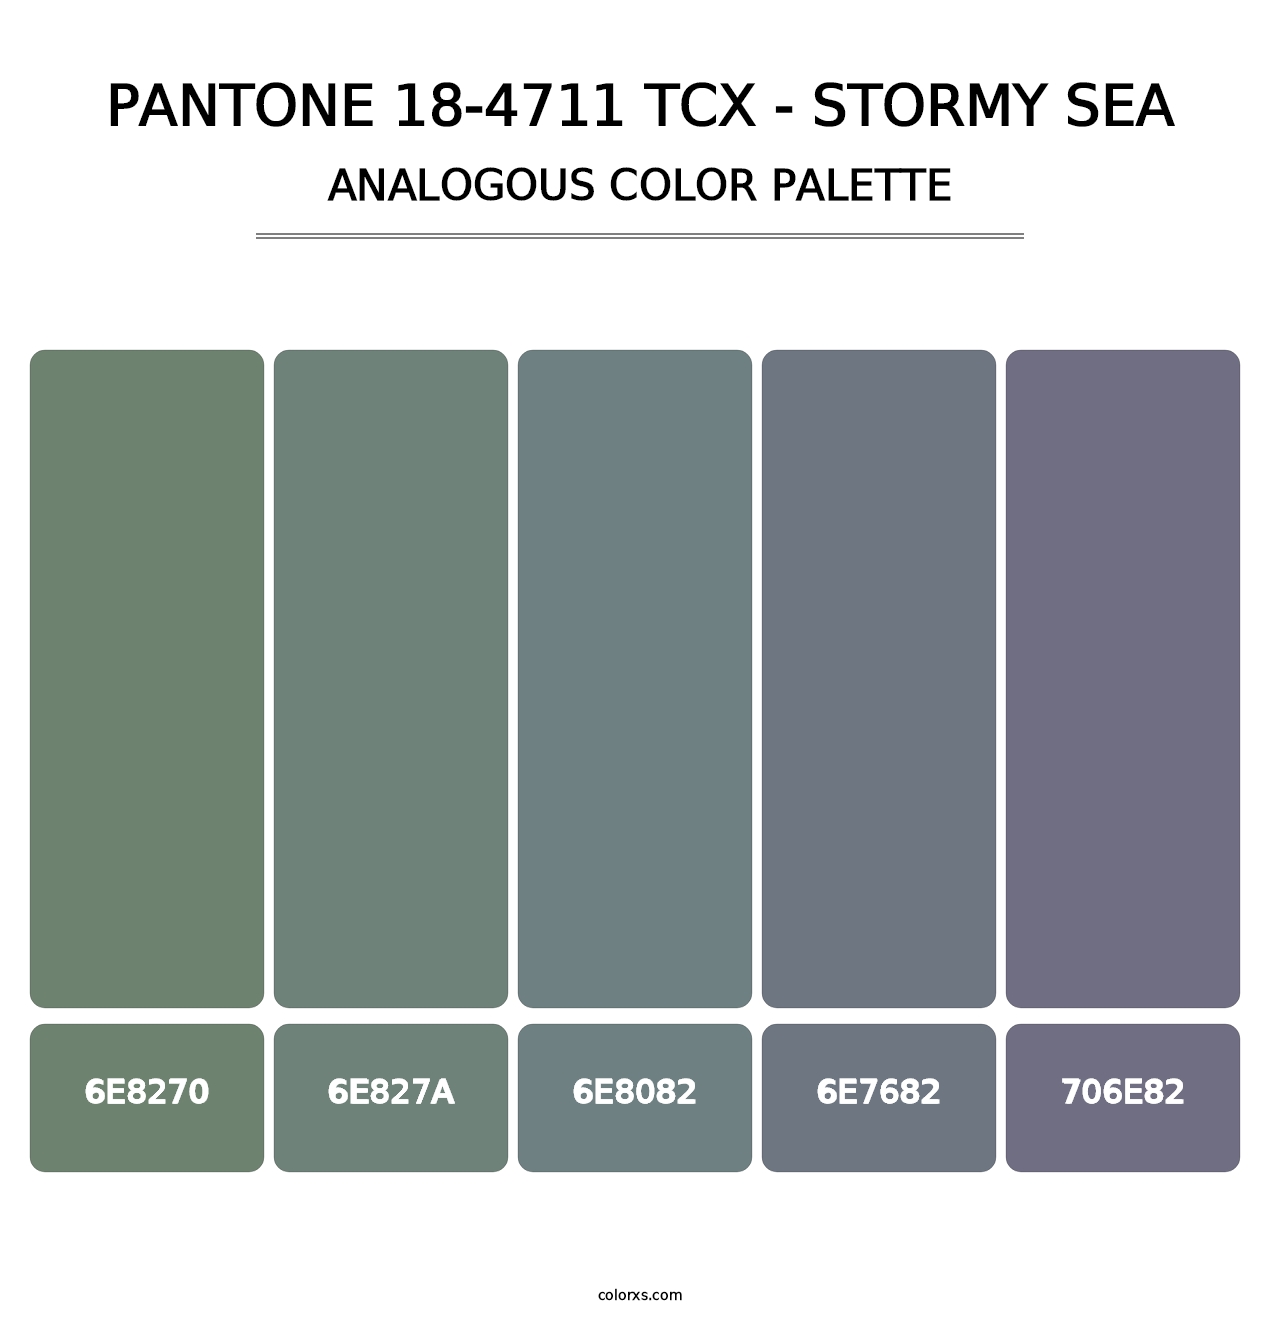 PANTONE 18-4711 TCX - Stormy Sea - Analogous Color Palette